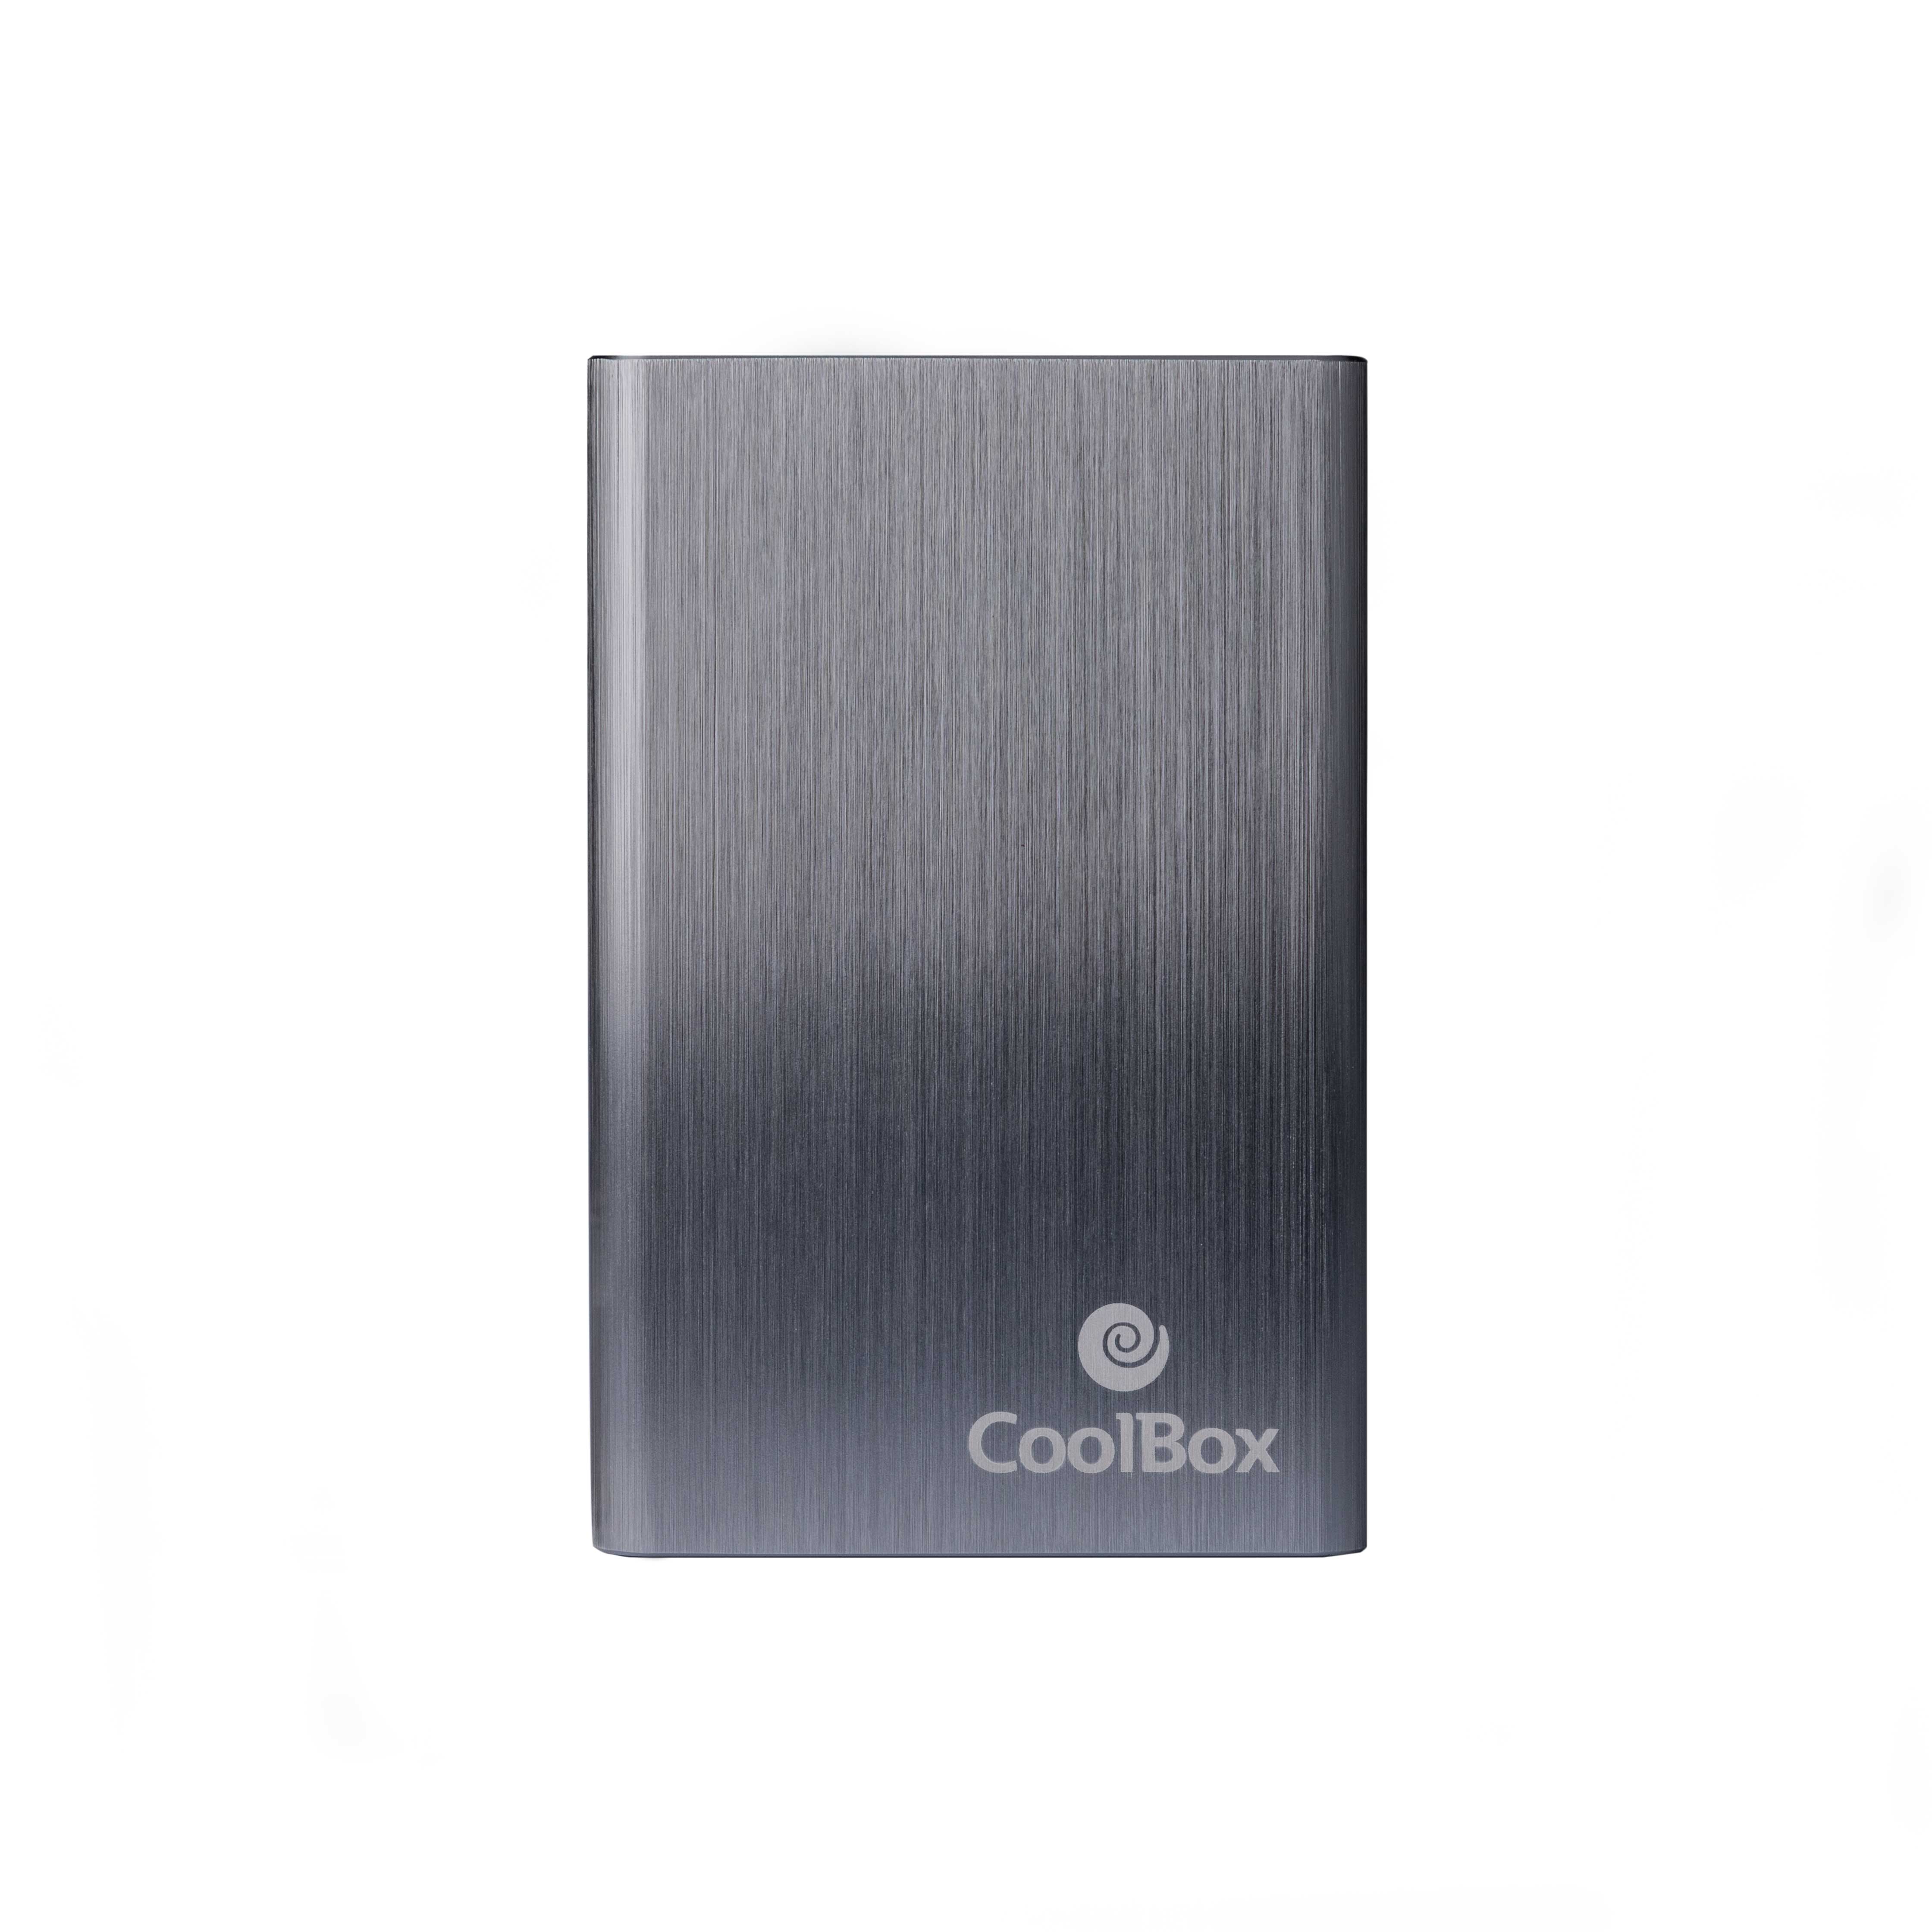 Coolbox - Carcasa externa transparente para discos SSD y HDD 2.5" SATA USB3.0